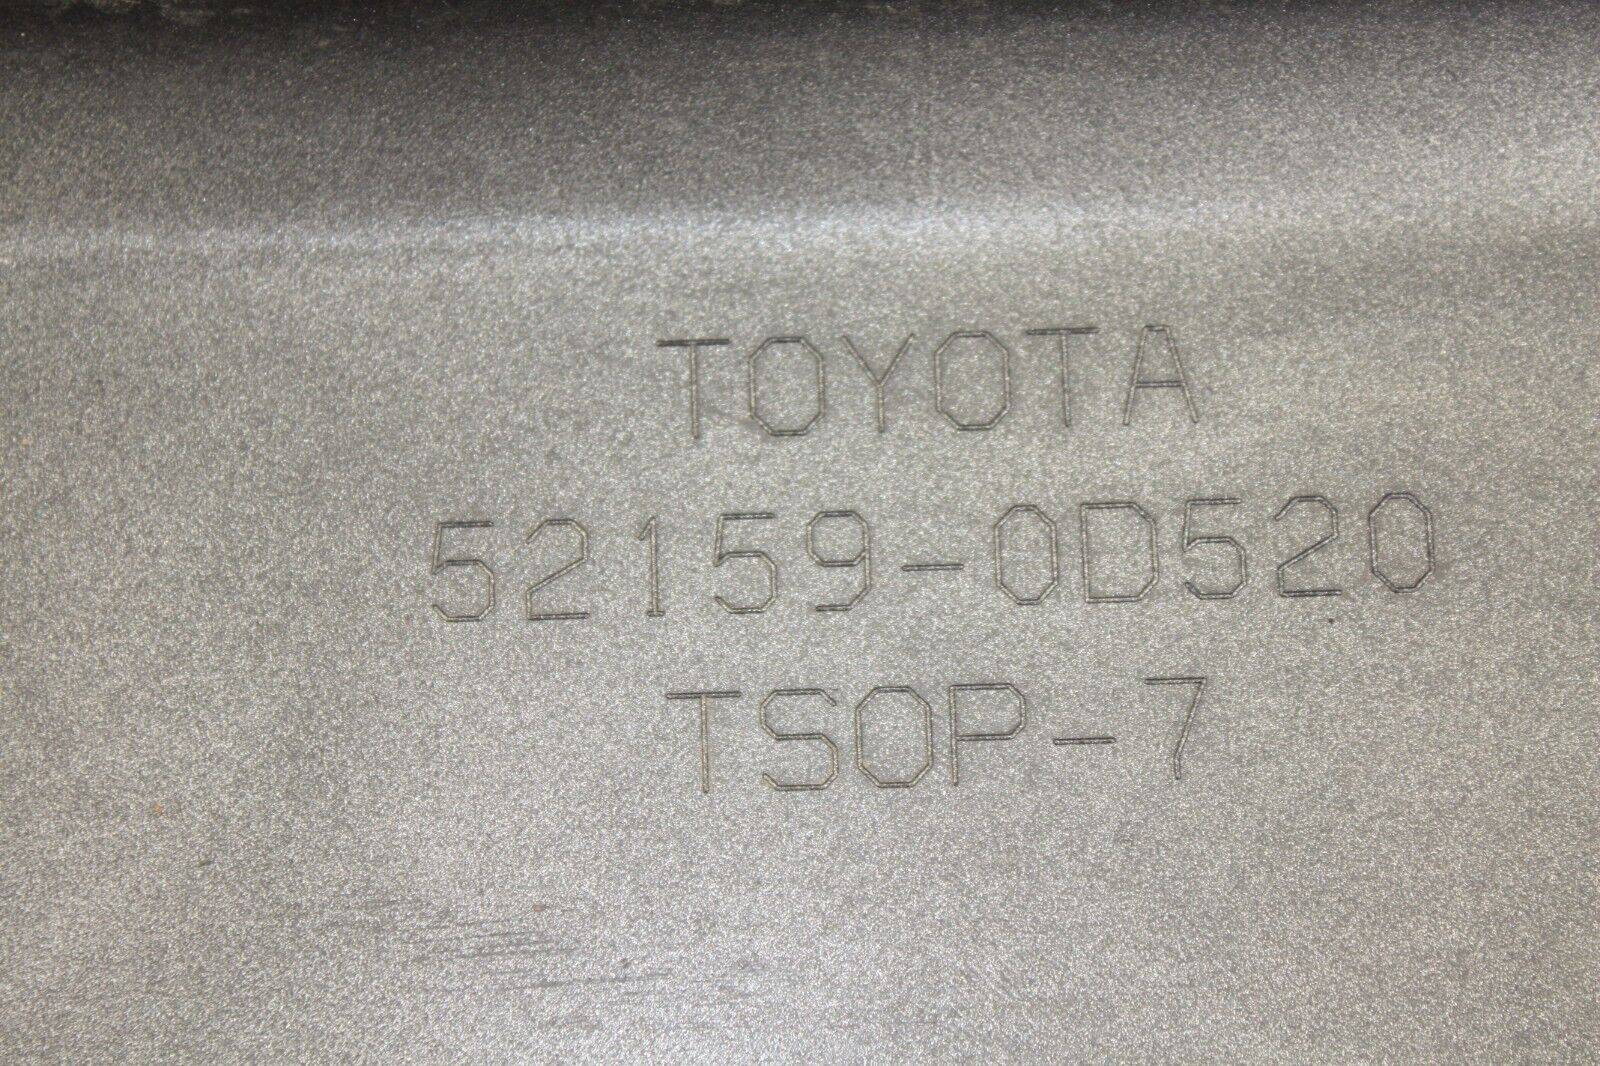 Toyota-Yaris-Rear-Bumper-2014-TO-2017-52159-0D520-Genuine-176369627030-13